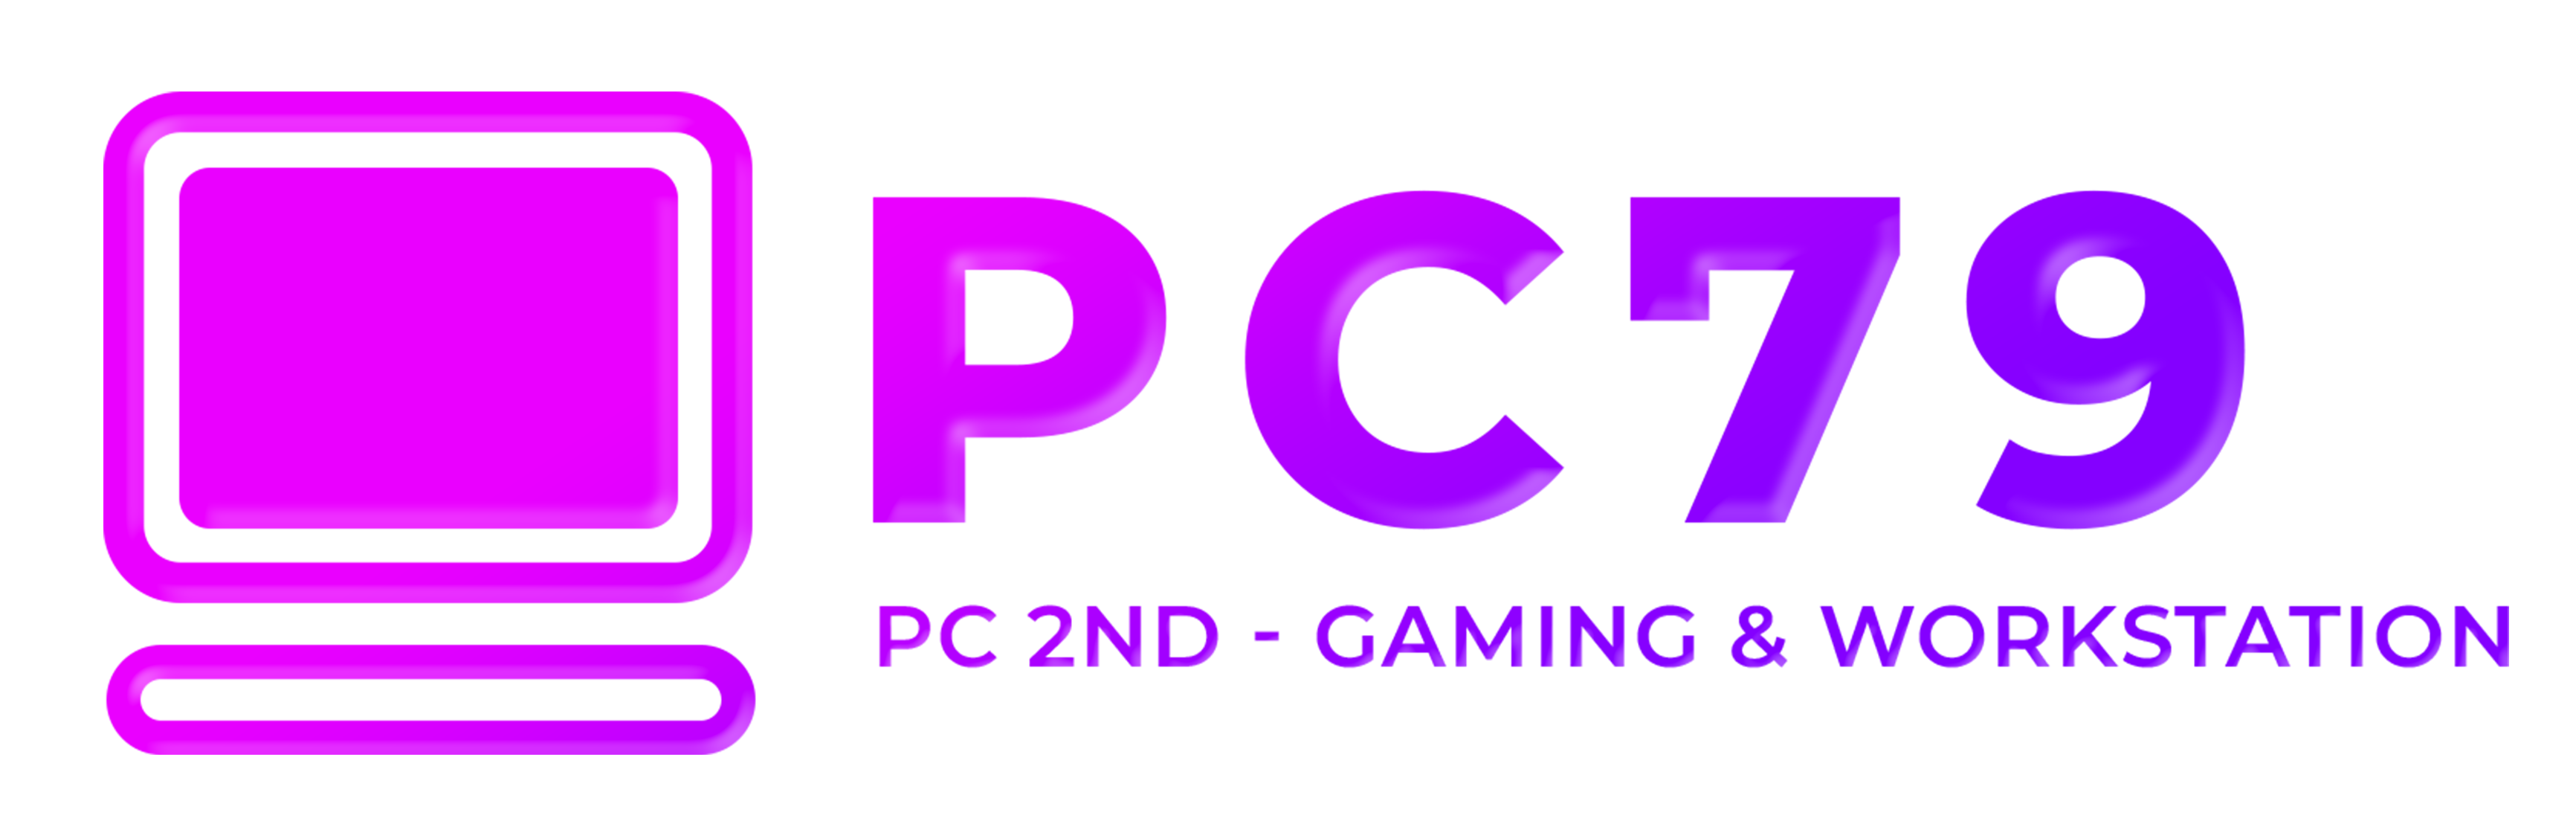 Logo PC79 Store